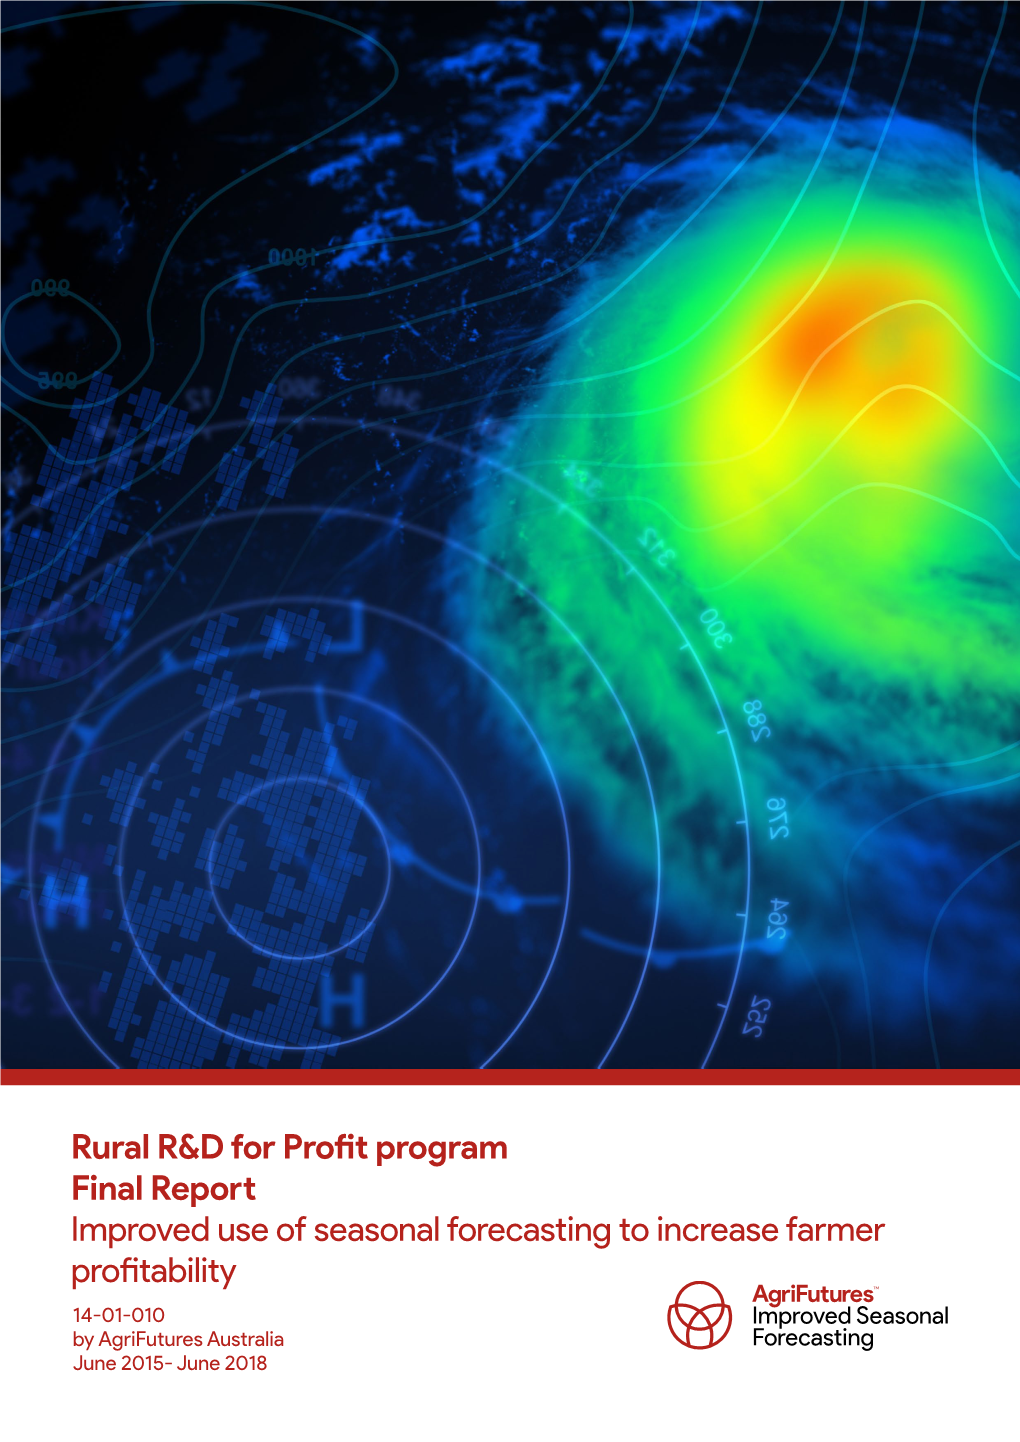 Rural R&D for Profit Program Final Report Improved Use of Seasonal